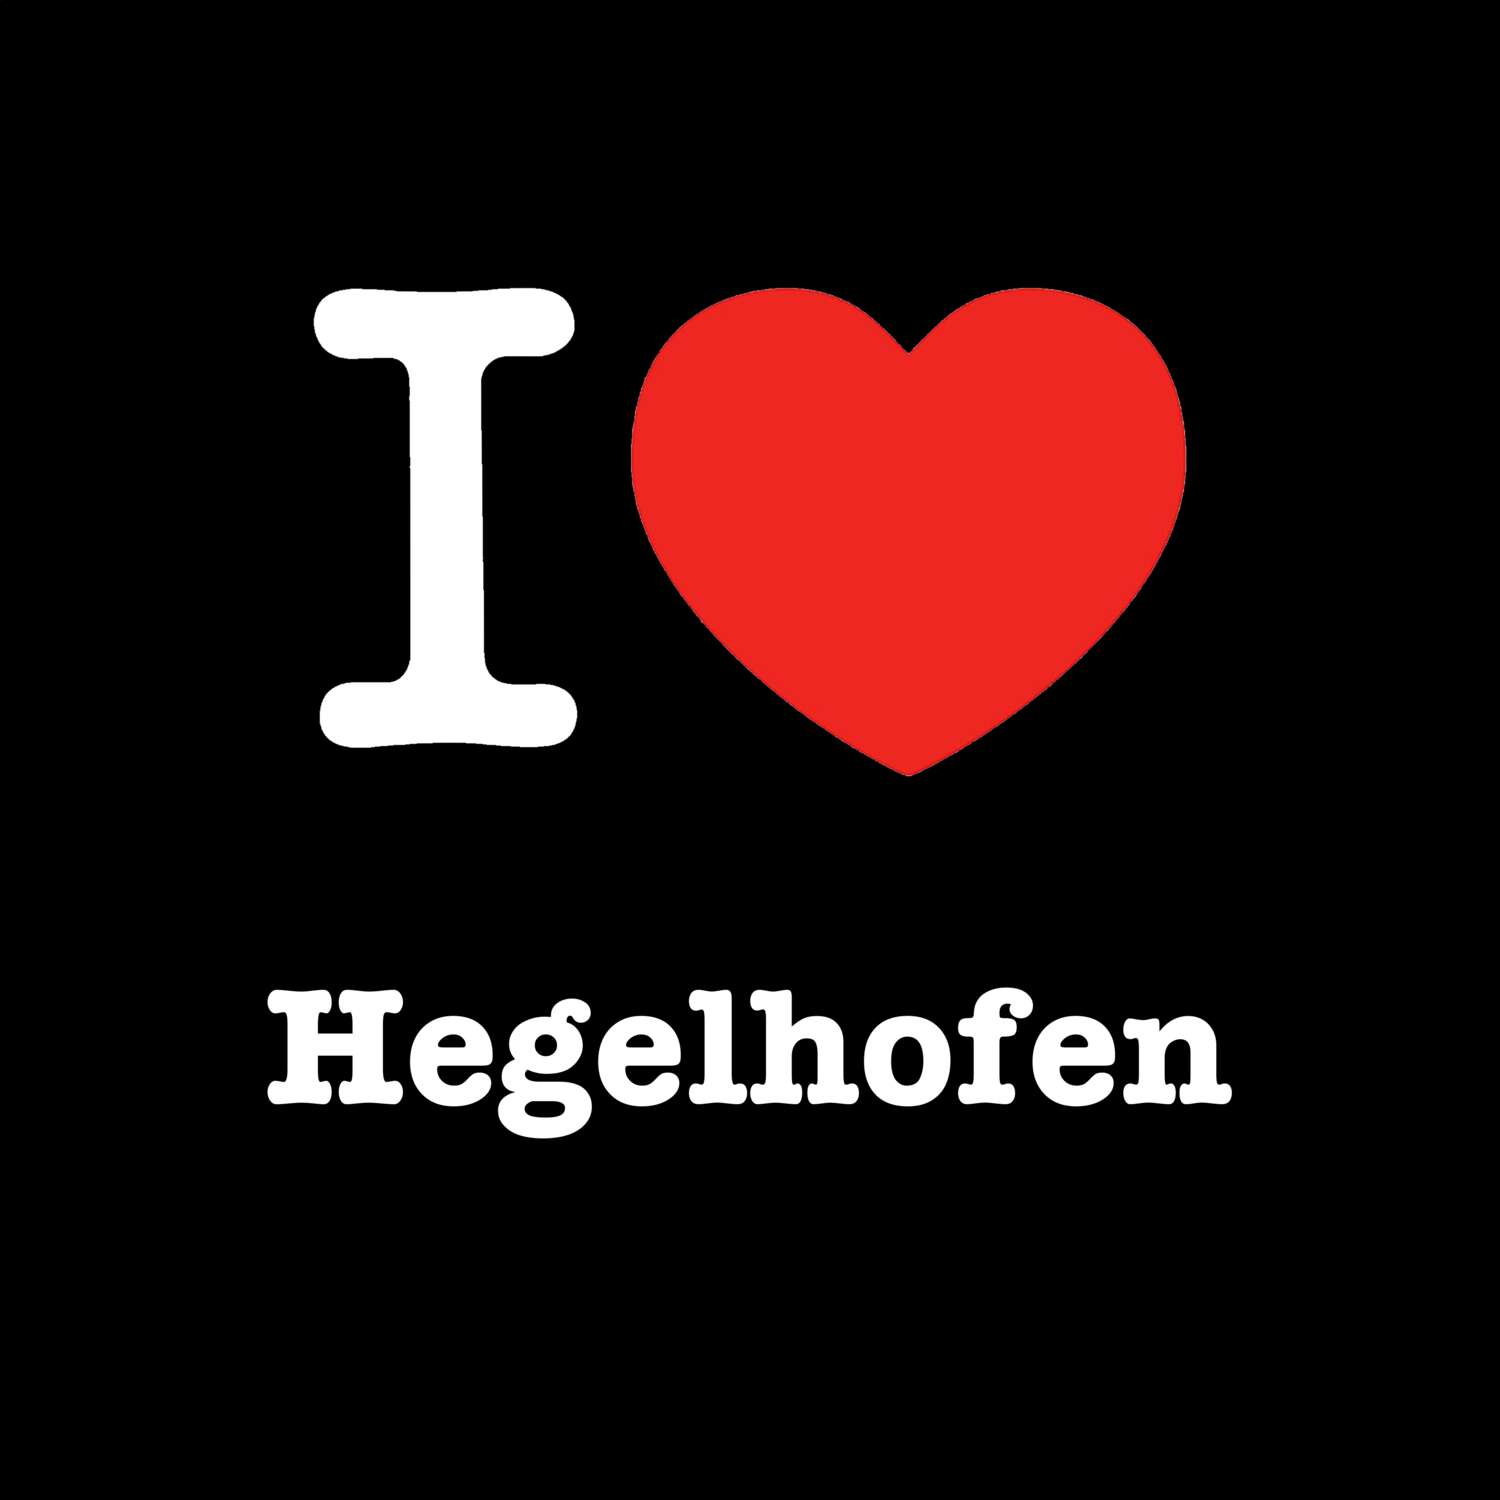 Hegelhofen T-Shirt »I love«